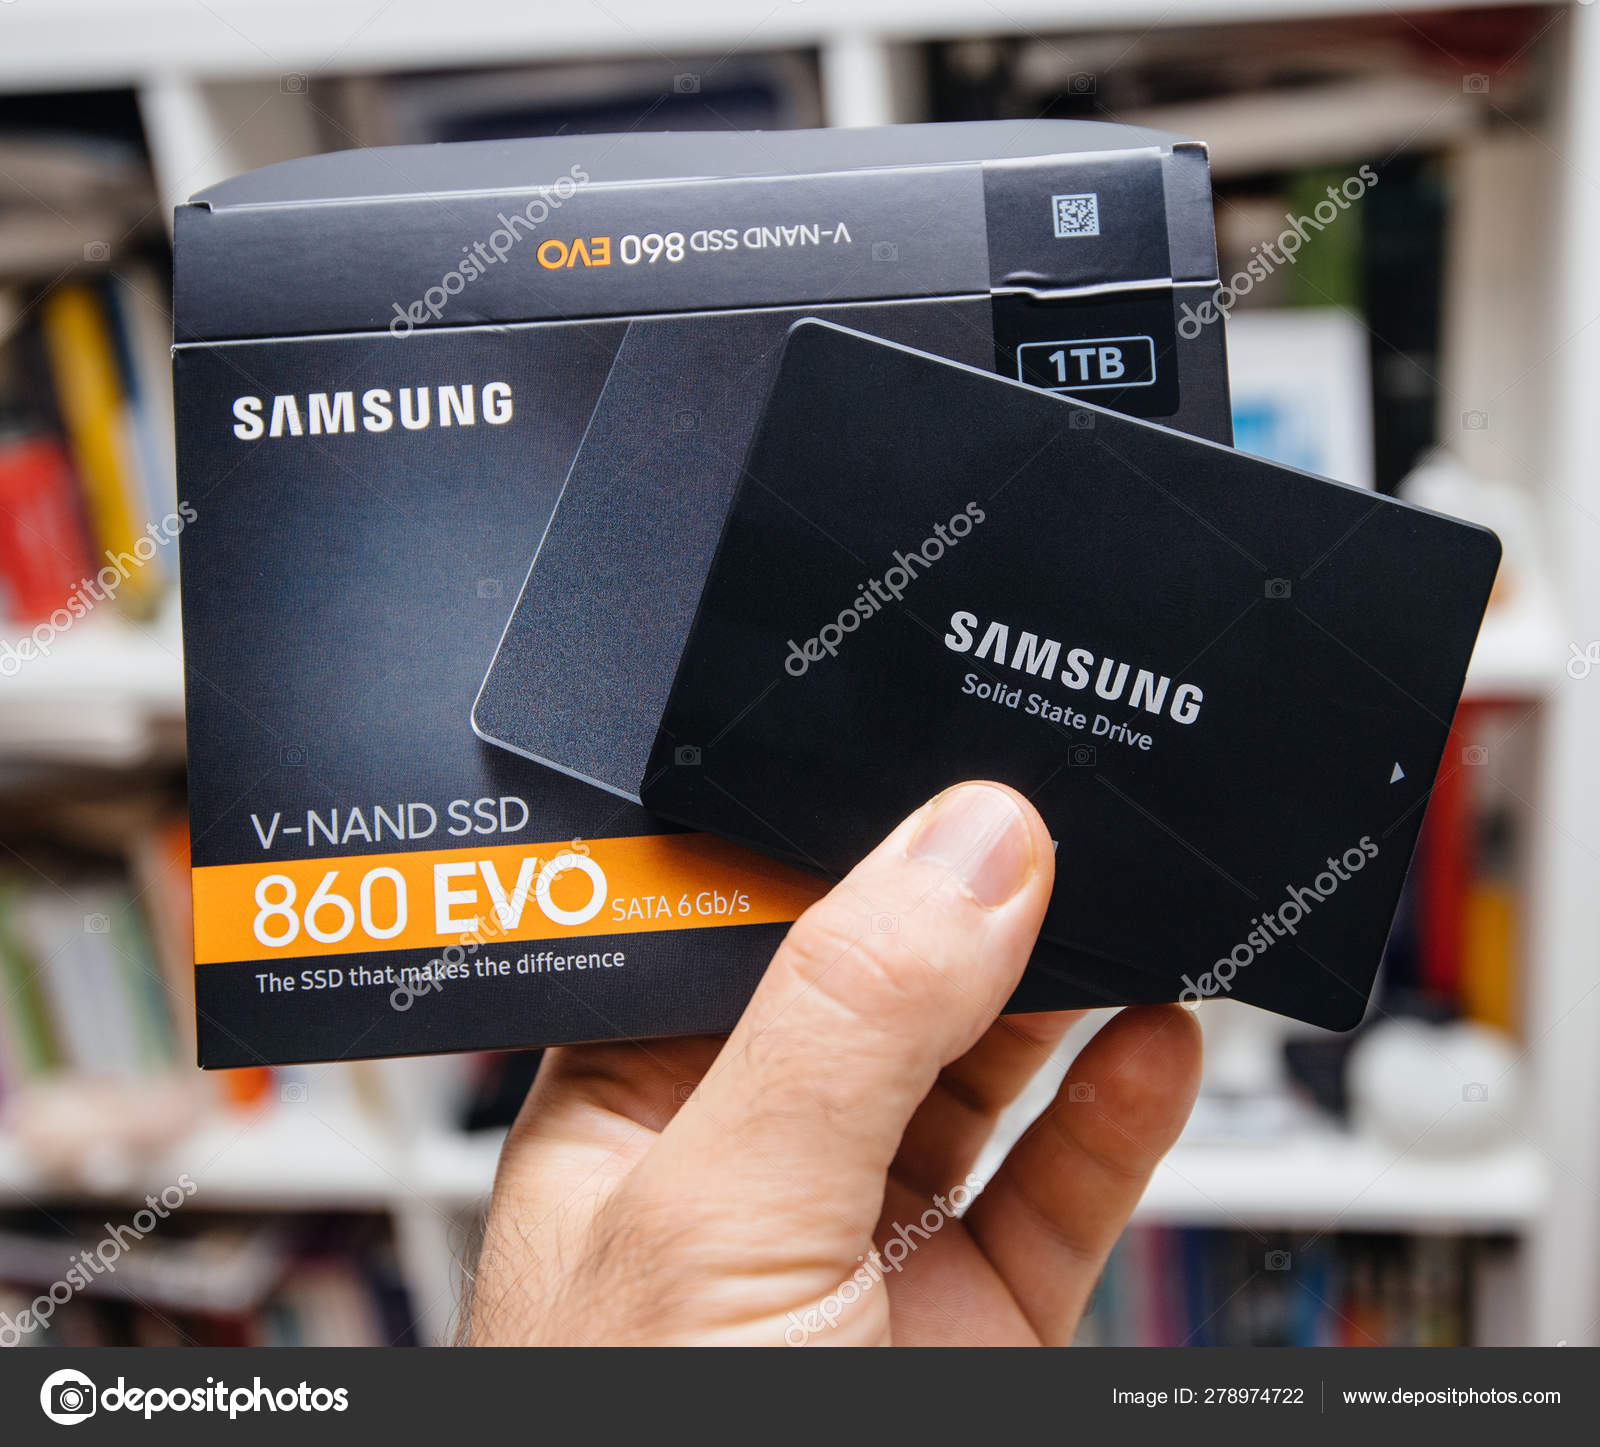 Man holding SSD Samsung disk drive in hand 860 1 tb – Stock Photo ifeelstock #278974722